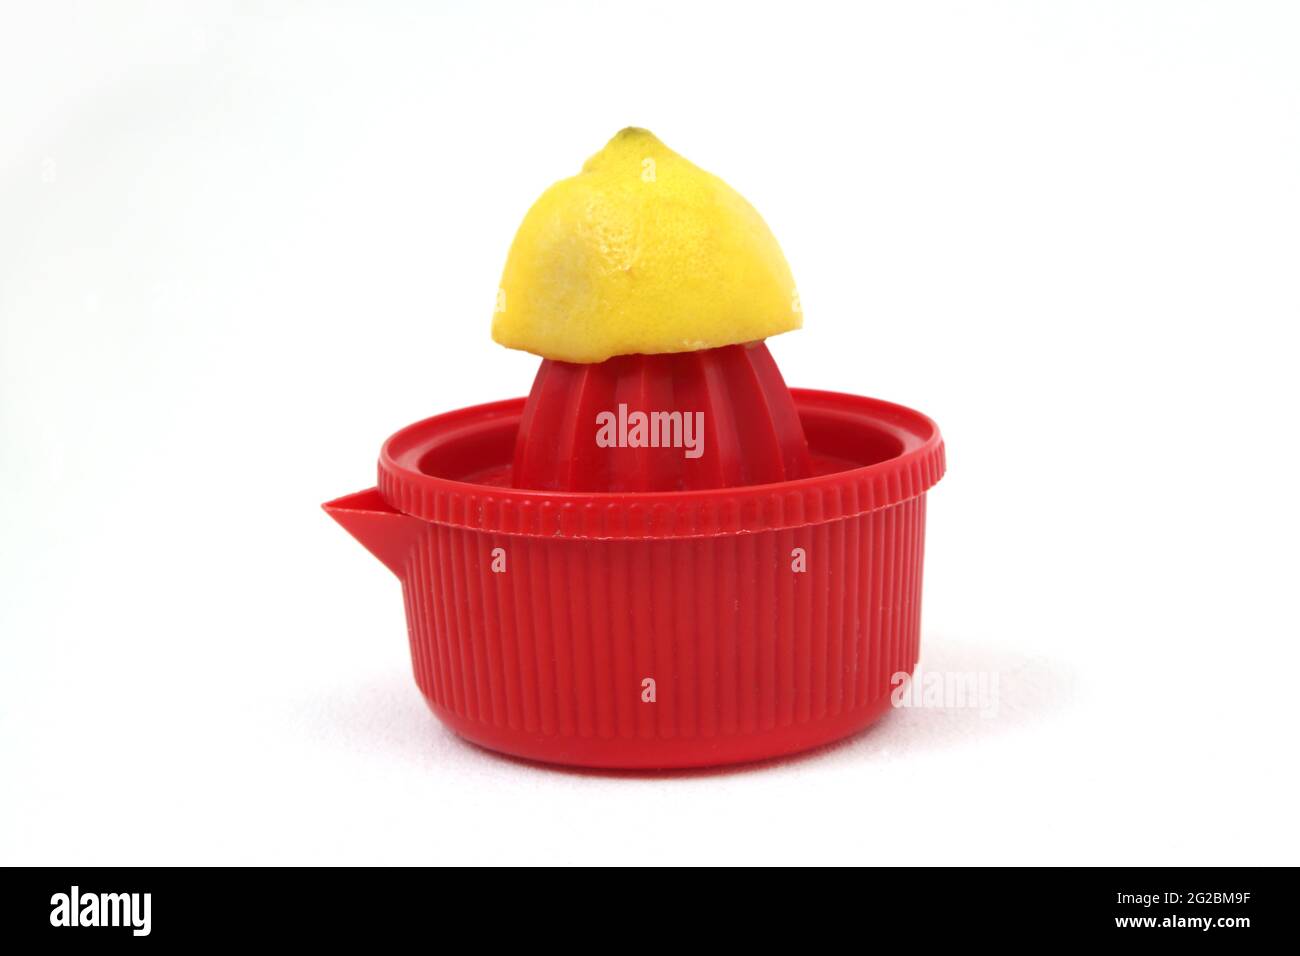 Lemon squeezer Cut Out Stock Images & Pictures - Alamy